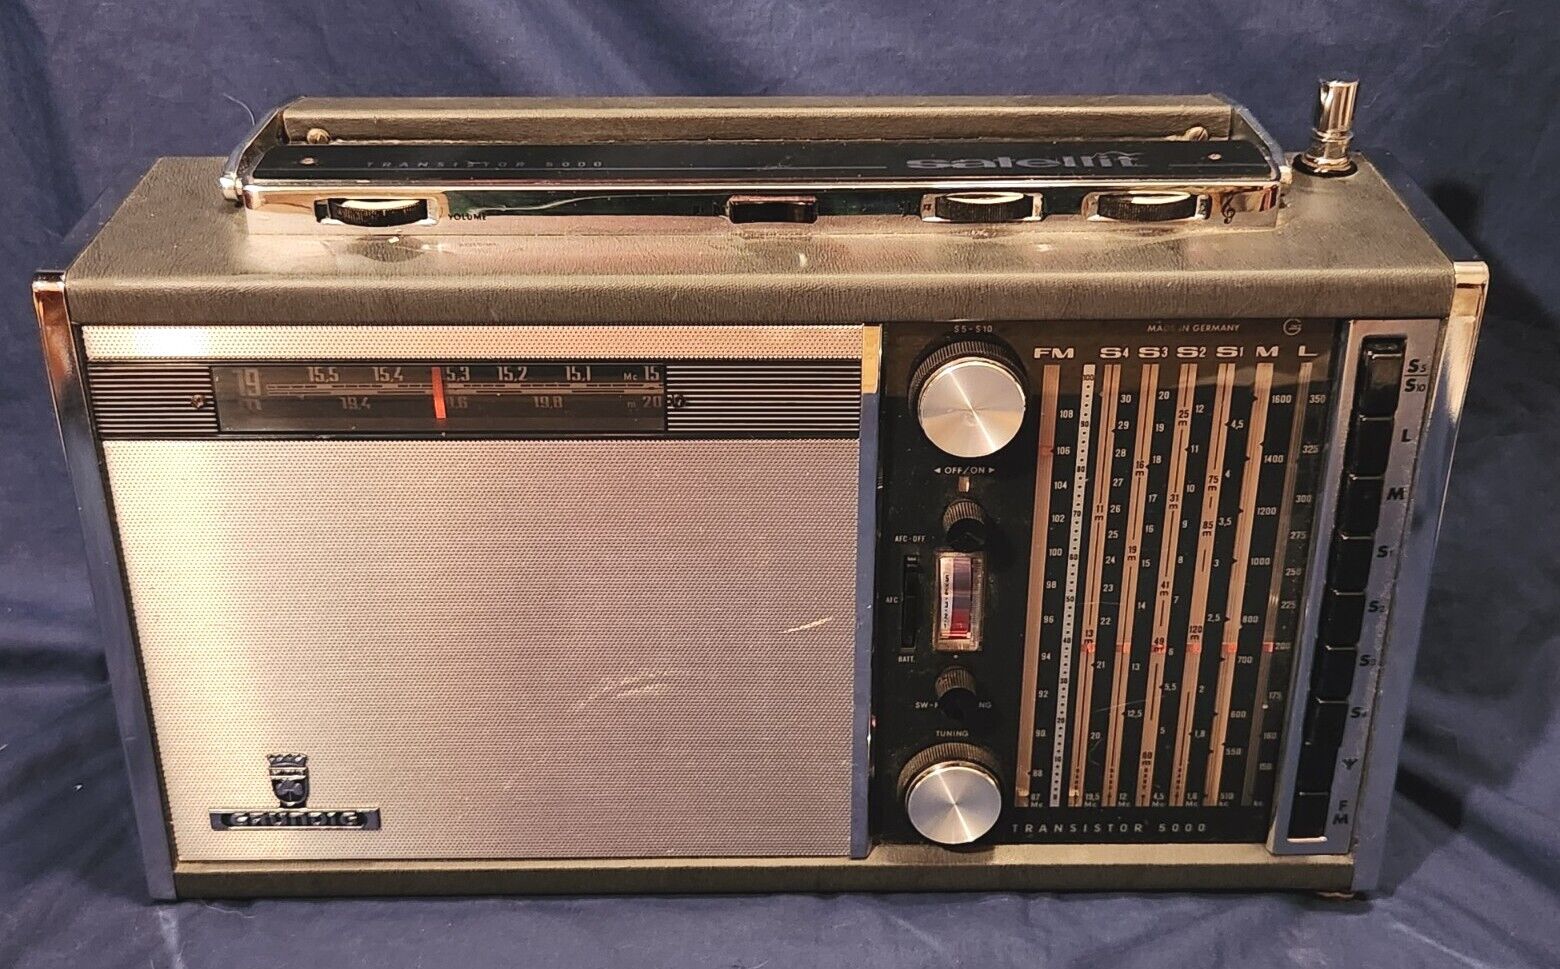 Rare Vintage Grundig Satellit Transistor 5000 AM/FM Shortwave Radio 